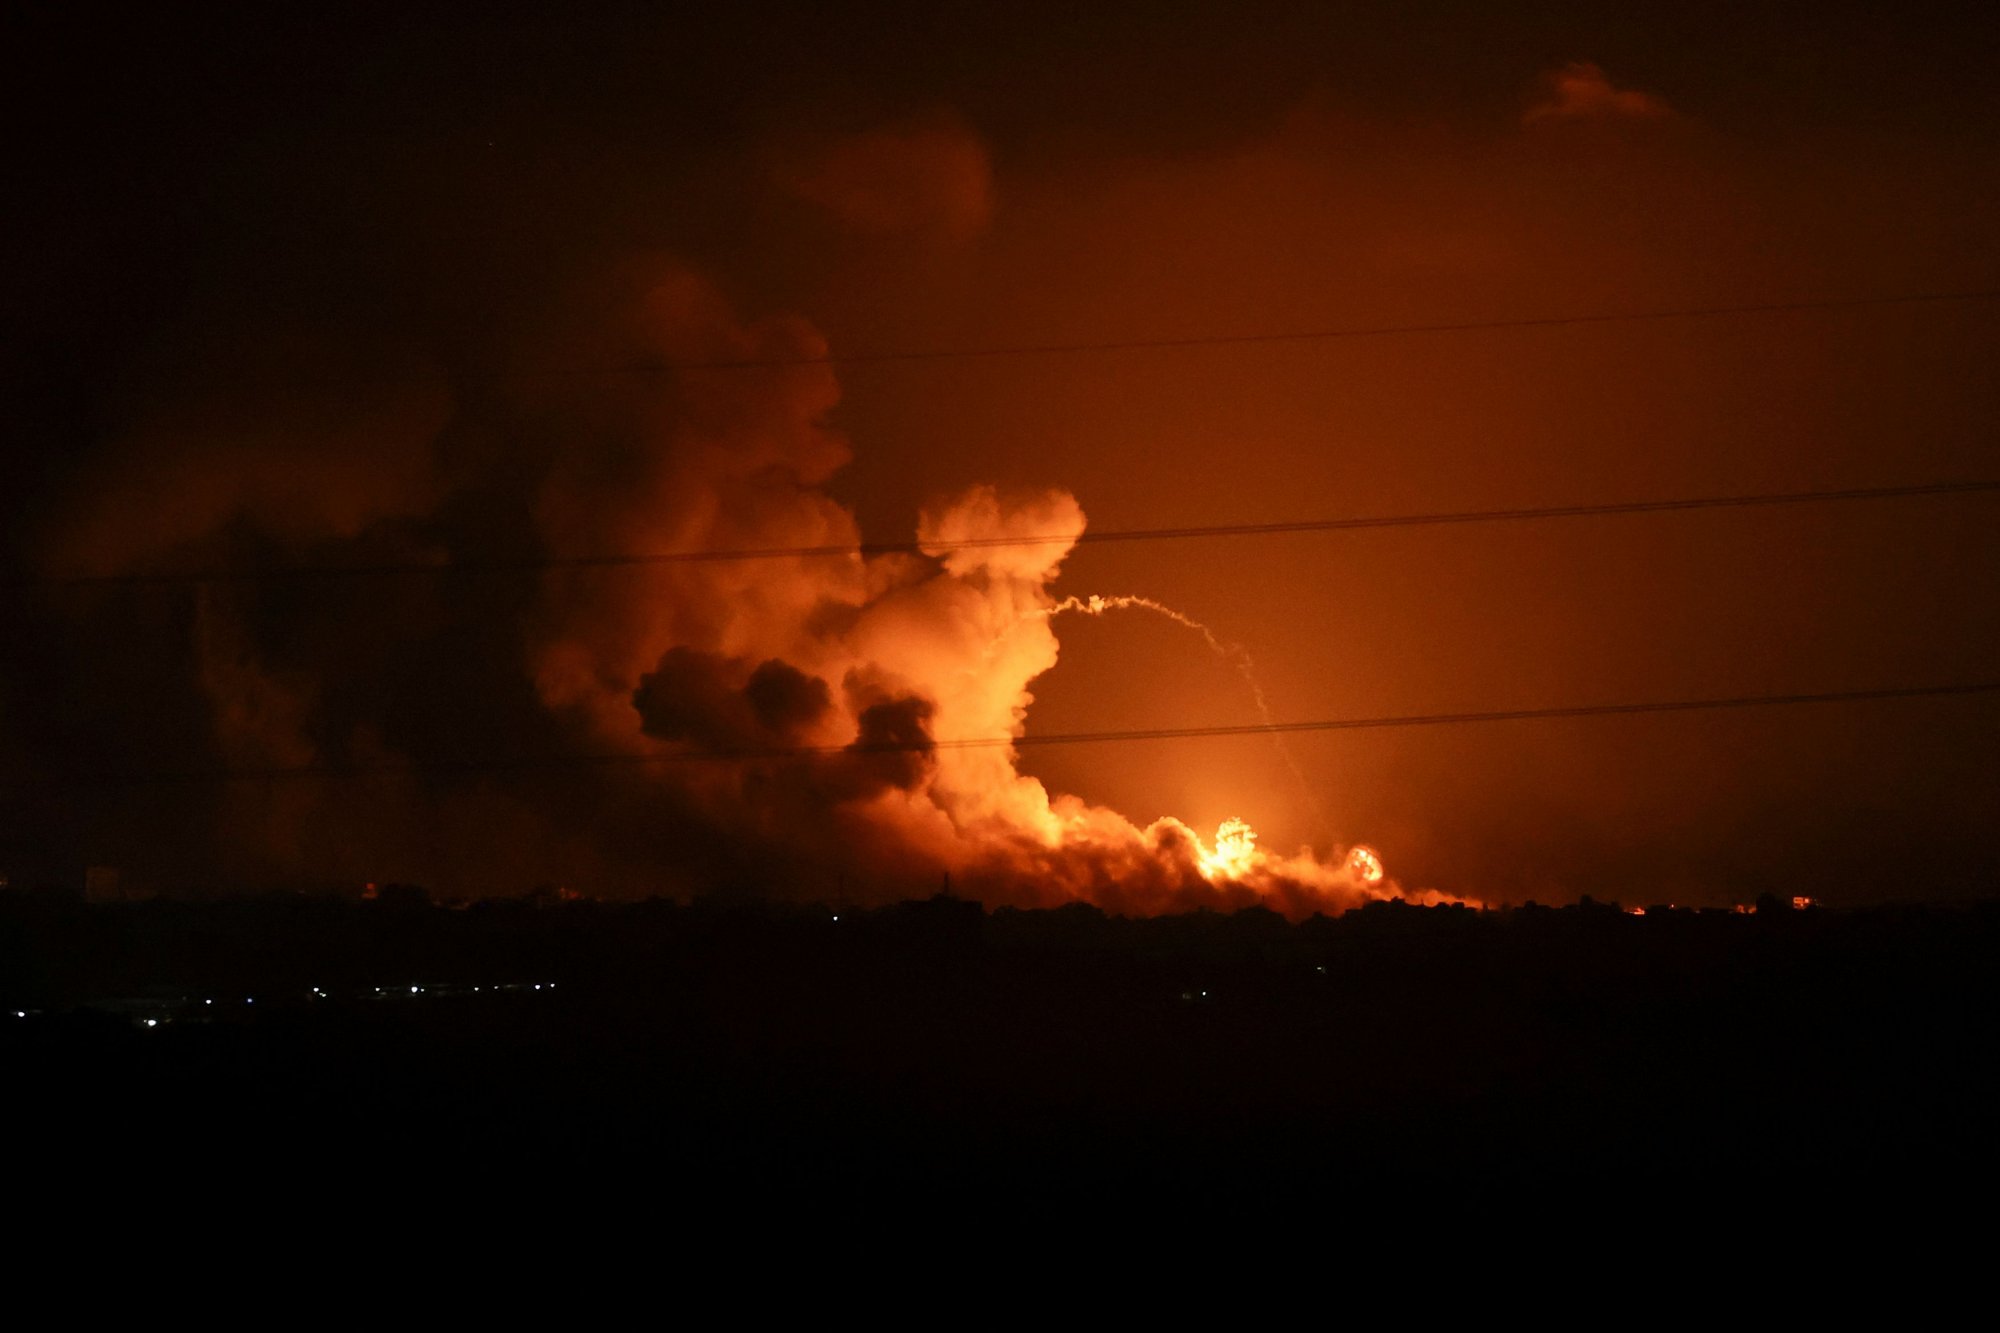 Live: Χωρισμένη σε νότια και βόρεια η Γάζα - Συνεχίζονται οι επιθέσεις σε αμάχους - Πολιτική κόντρα στο Ισραήλ